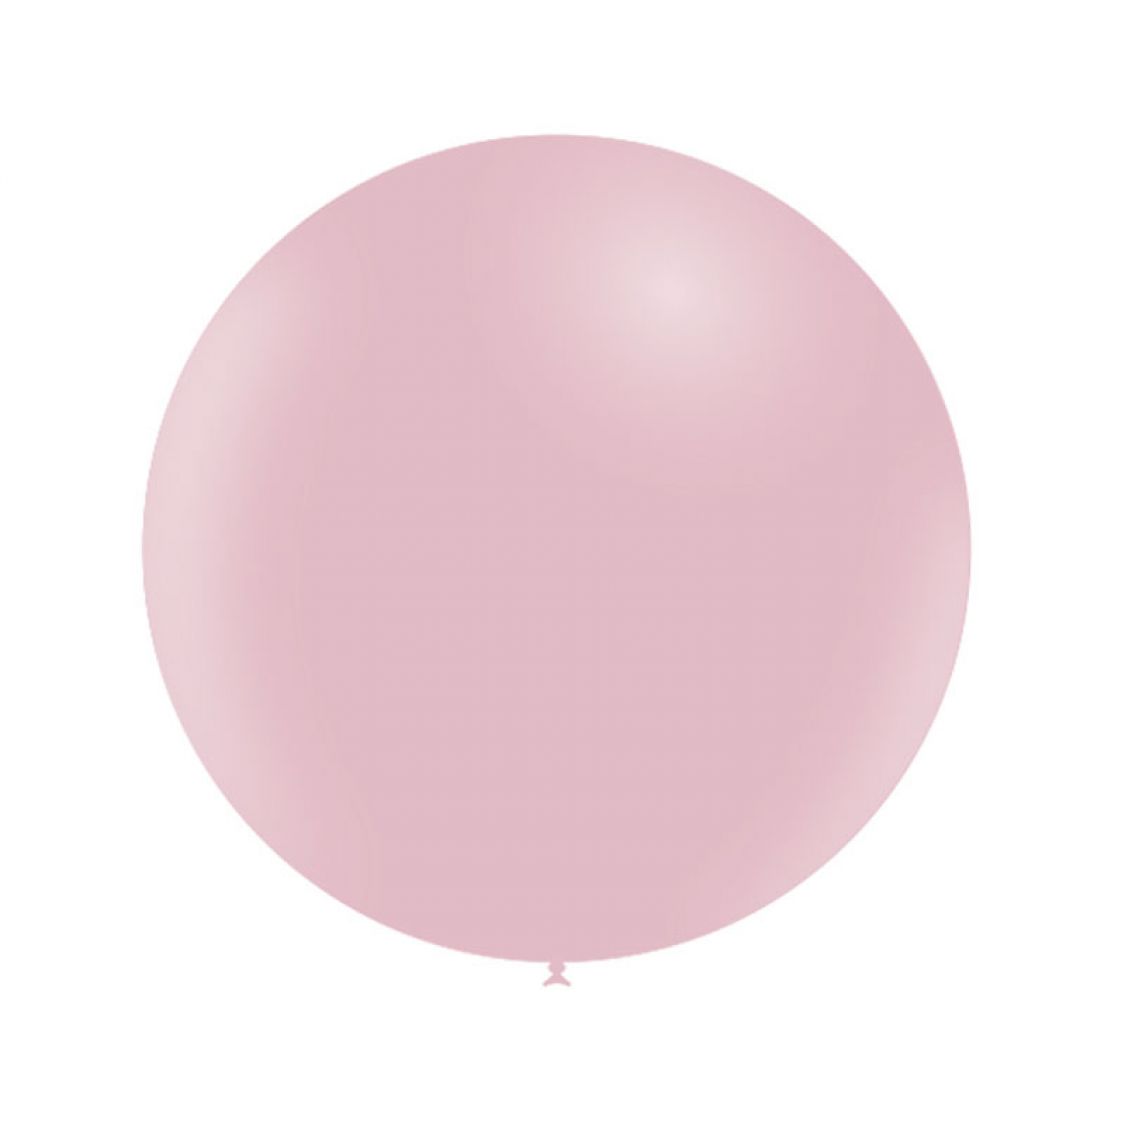 Ballon rose bonbon pastel mat